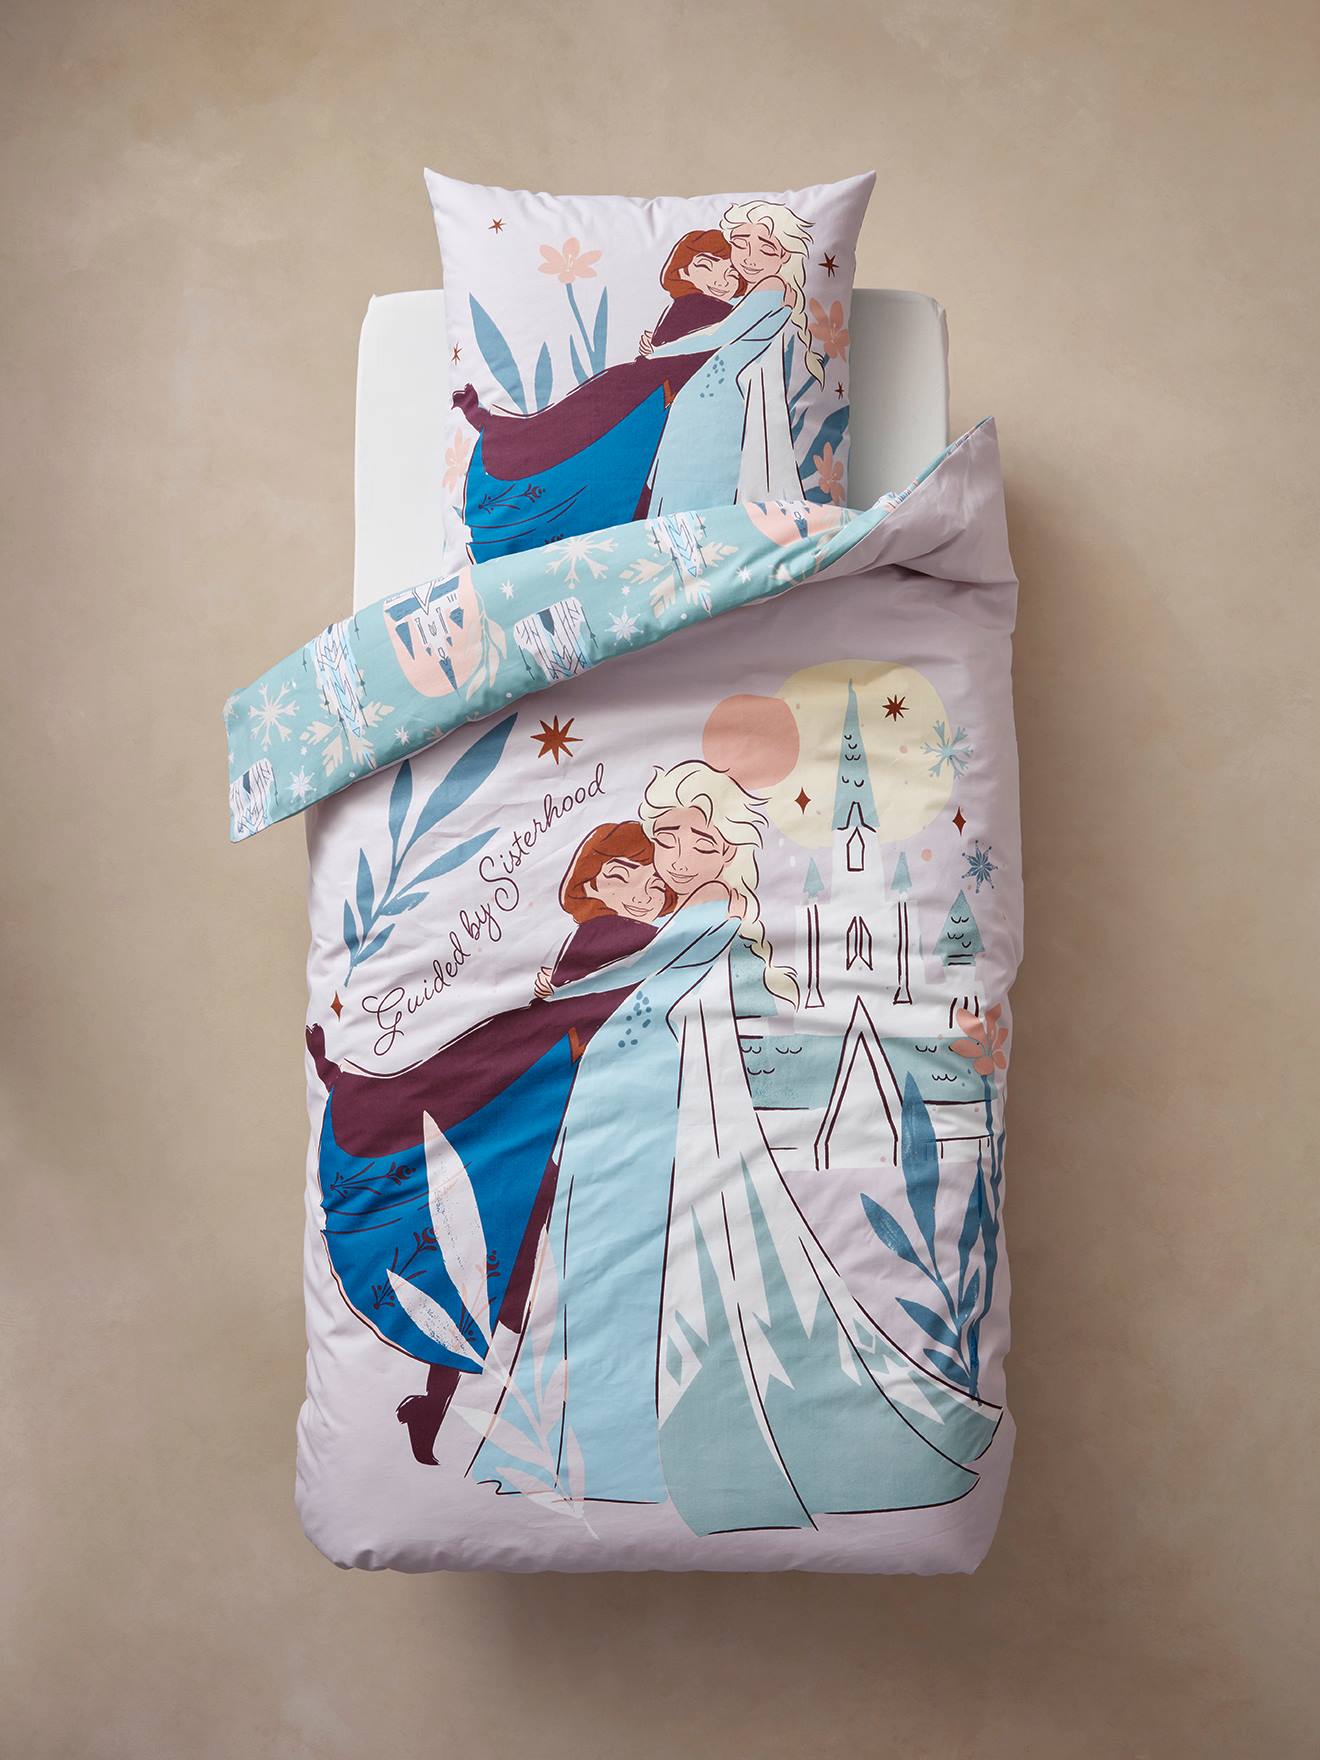 Duvet Cover & Pillowcase Set for Children, Frozen by Disney(r) ecru